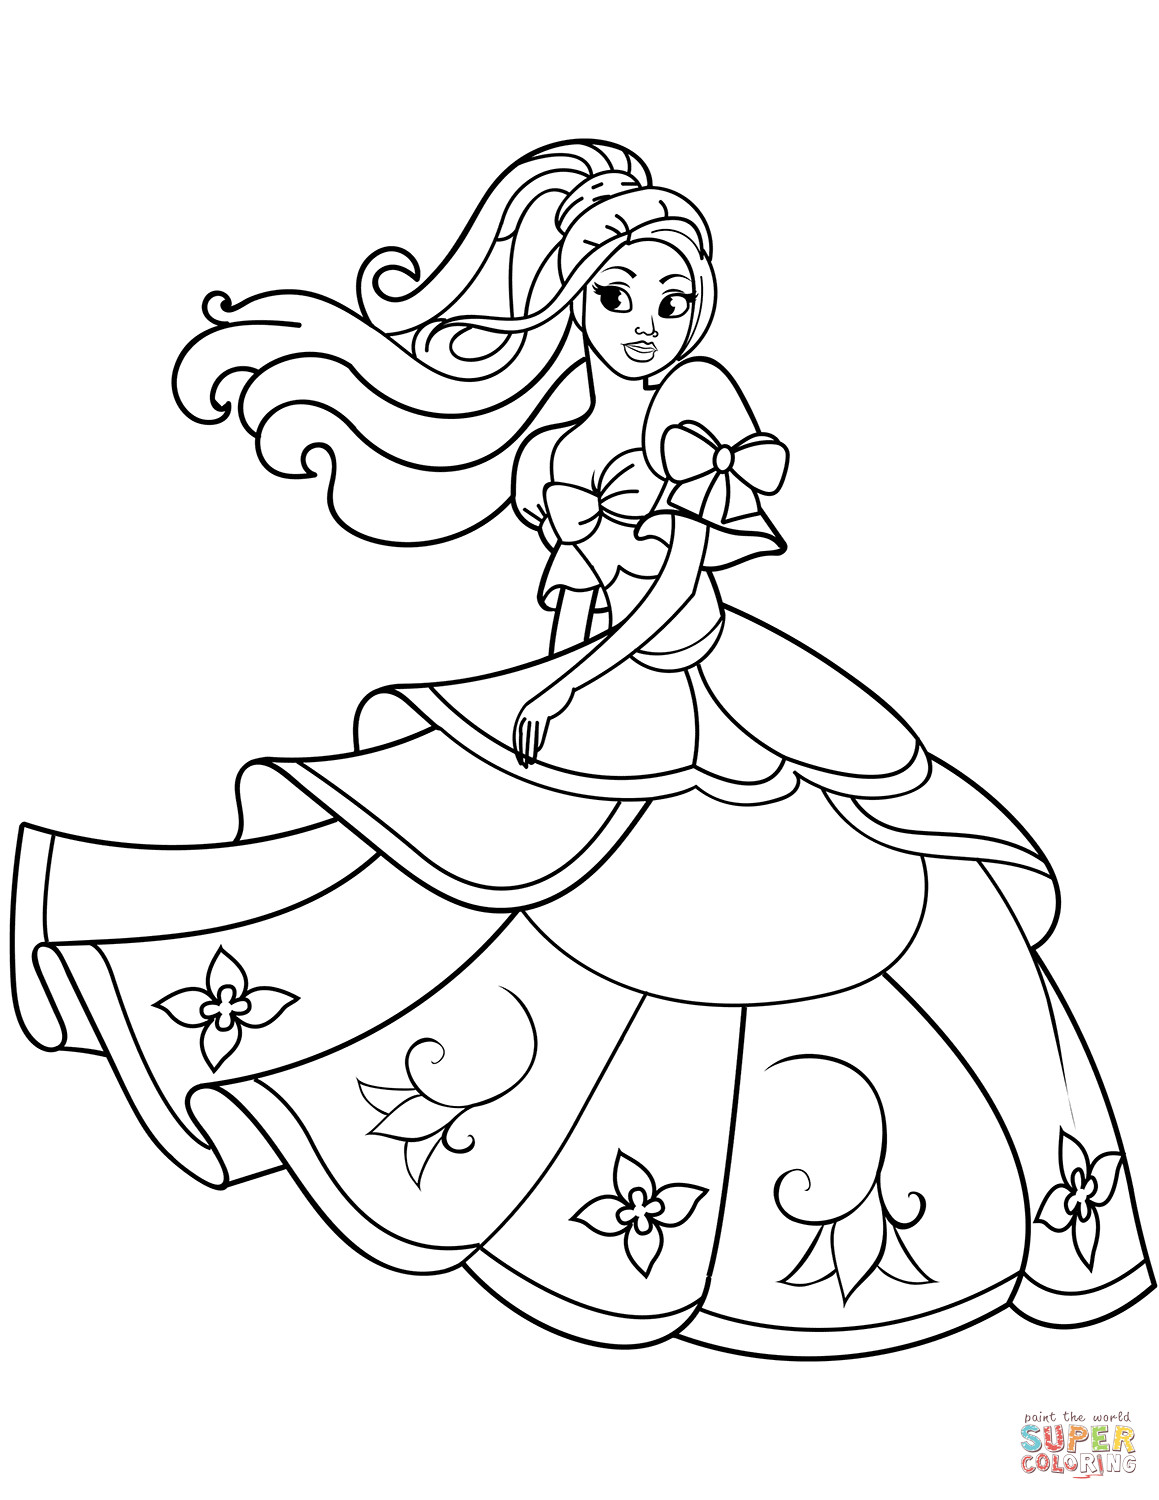 Princess Printable Coloring Pages
 Dancing Princess coloring page